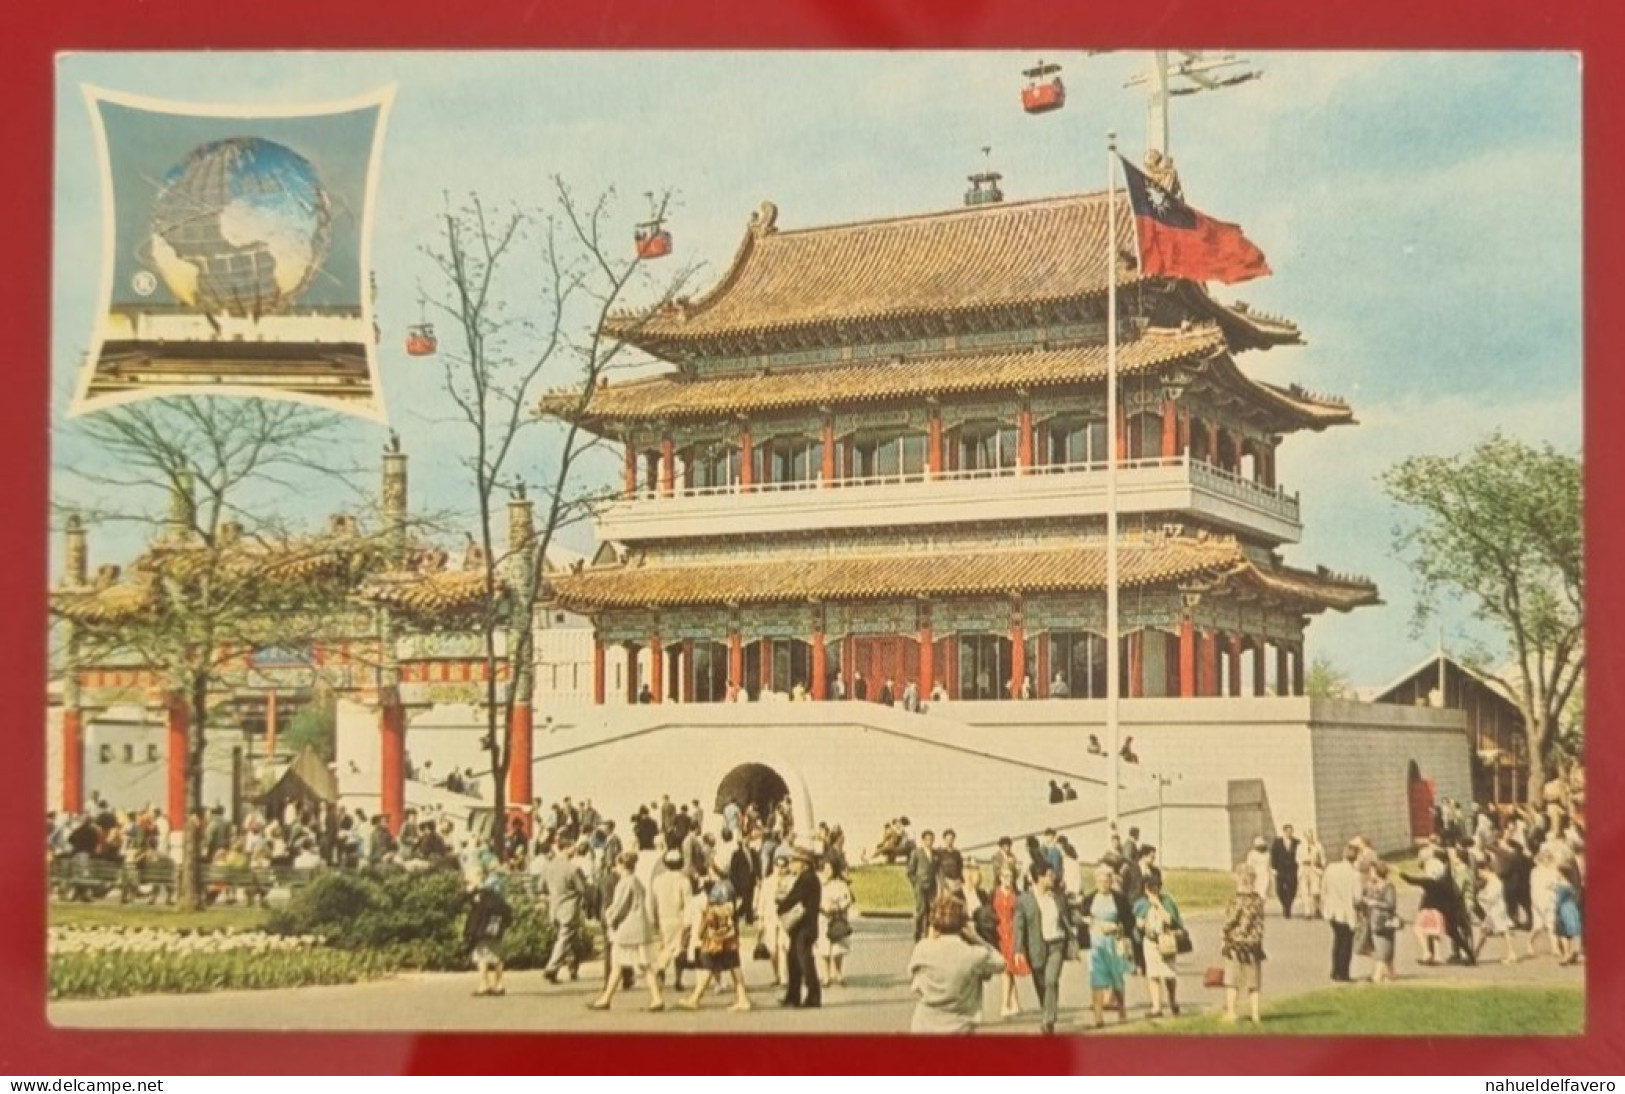 Uncirculated Postcard - USA - NY, NEW YORK WORLD'S FAIR 1964-65 - REPUBLICOF CHINA PAVILION - Ausstellungen